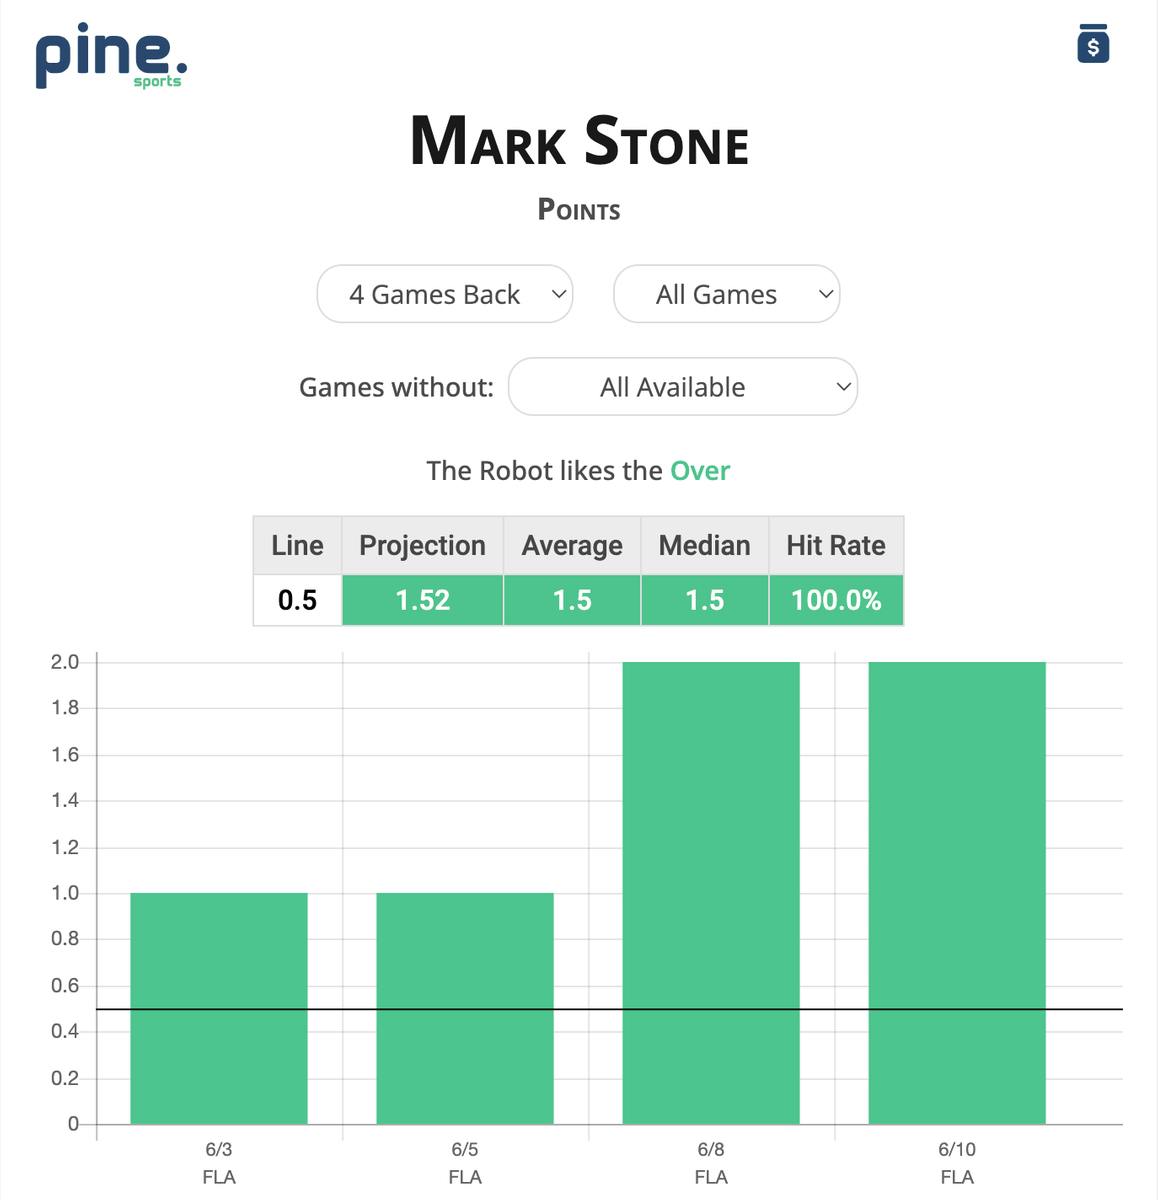 Pine Stats